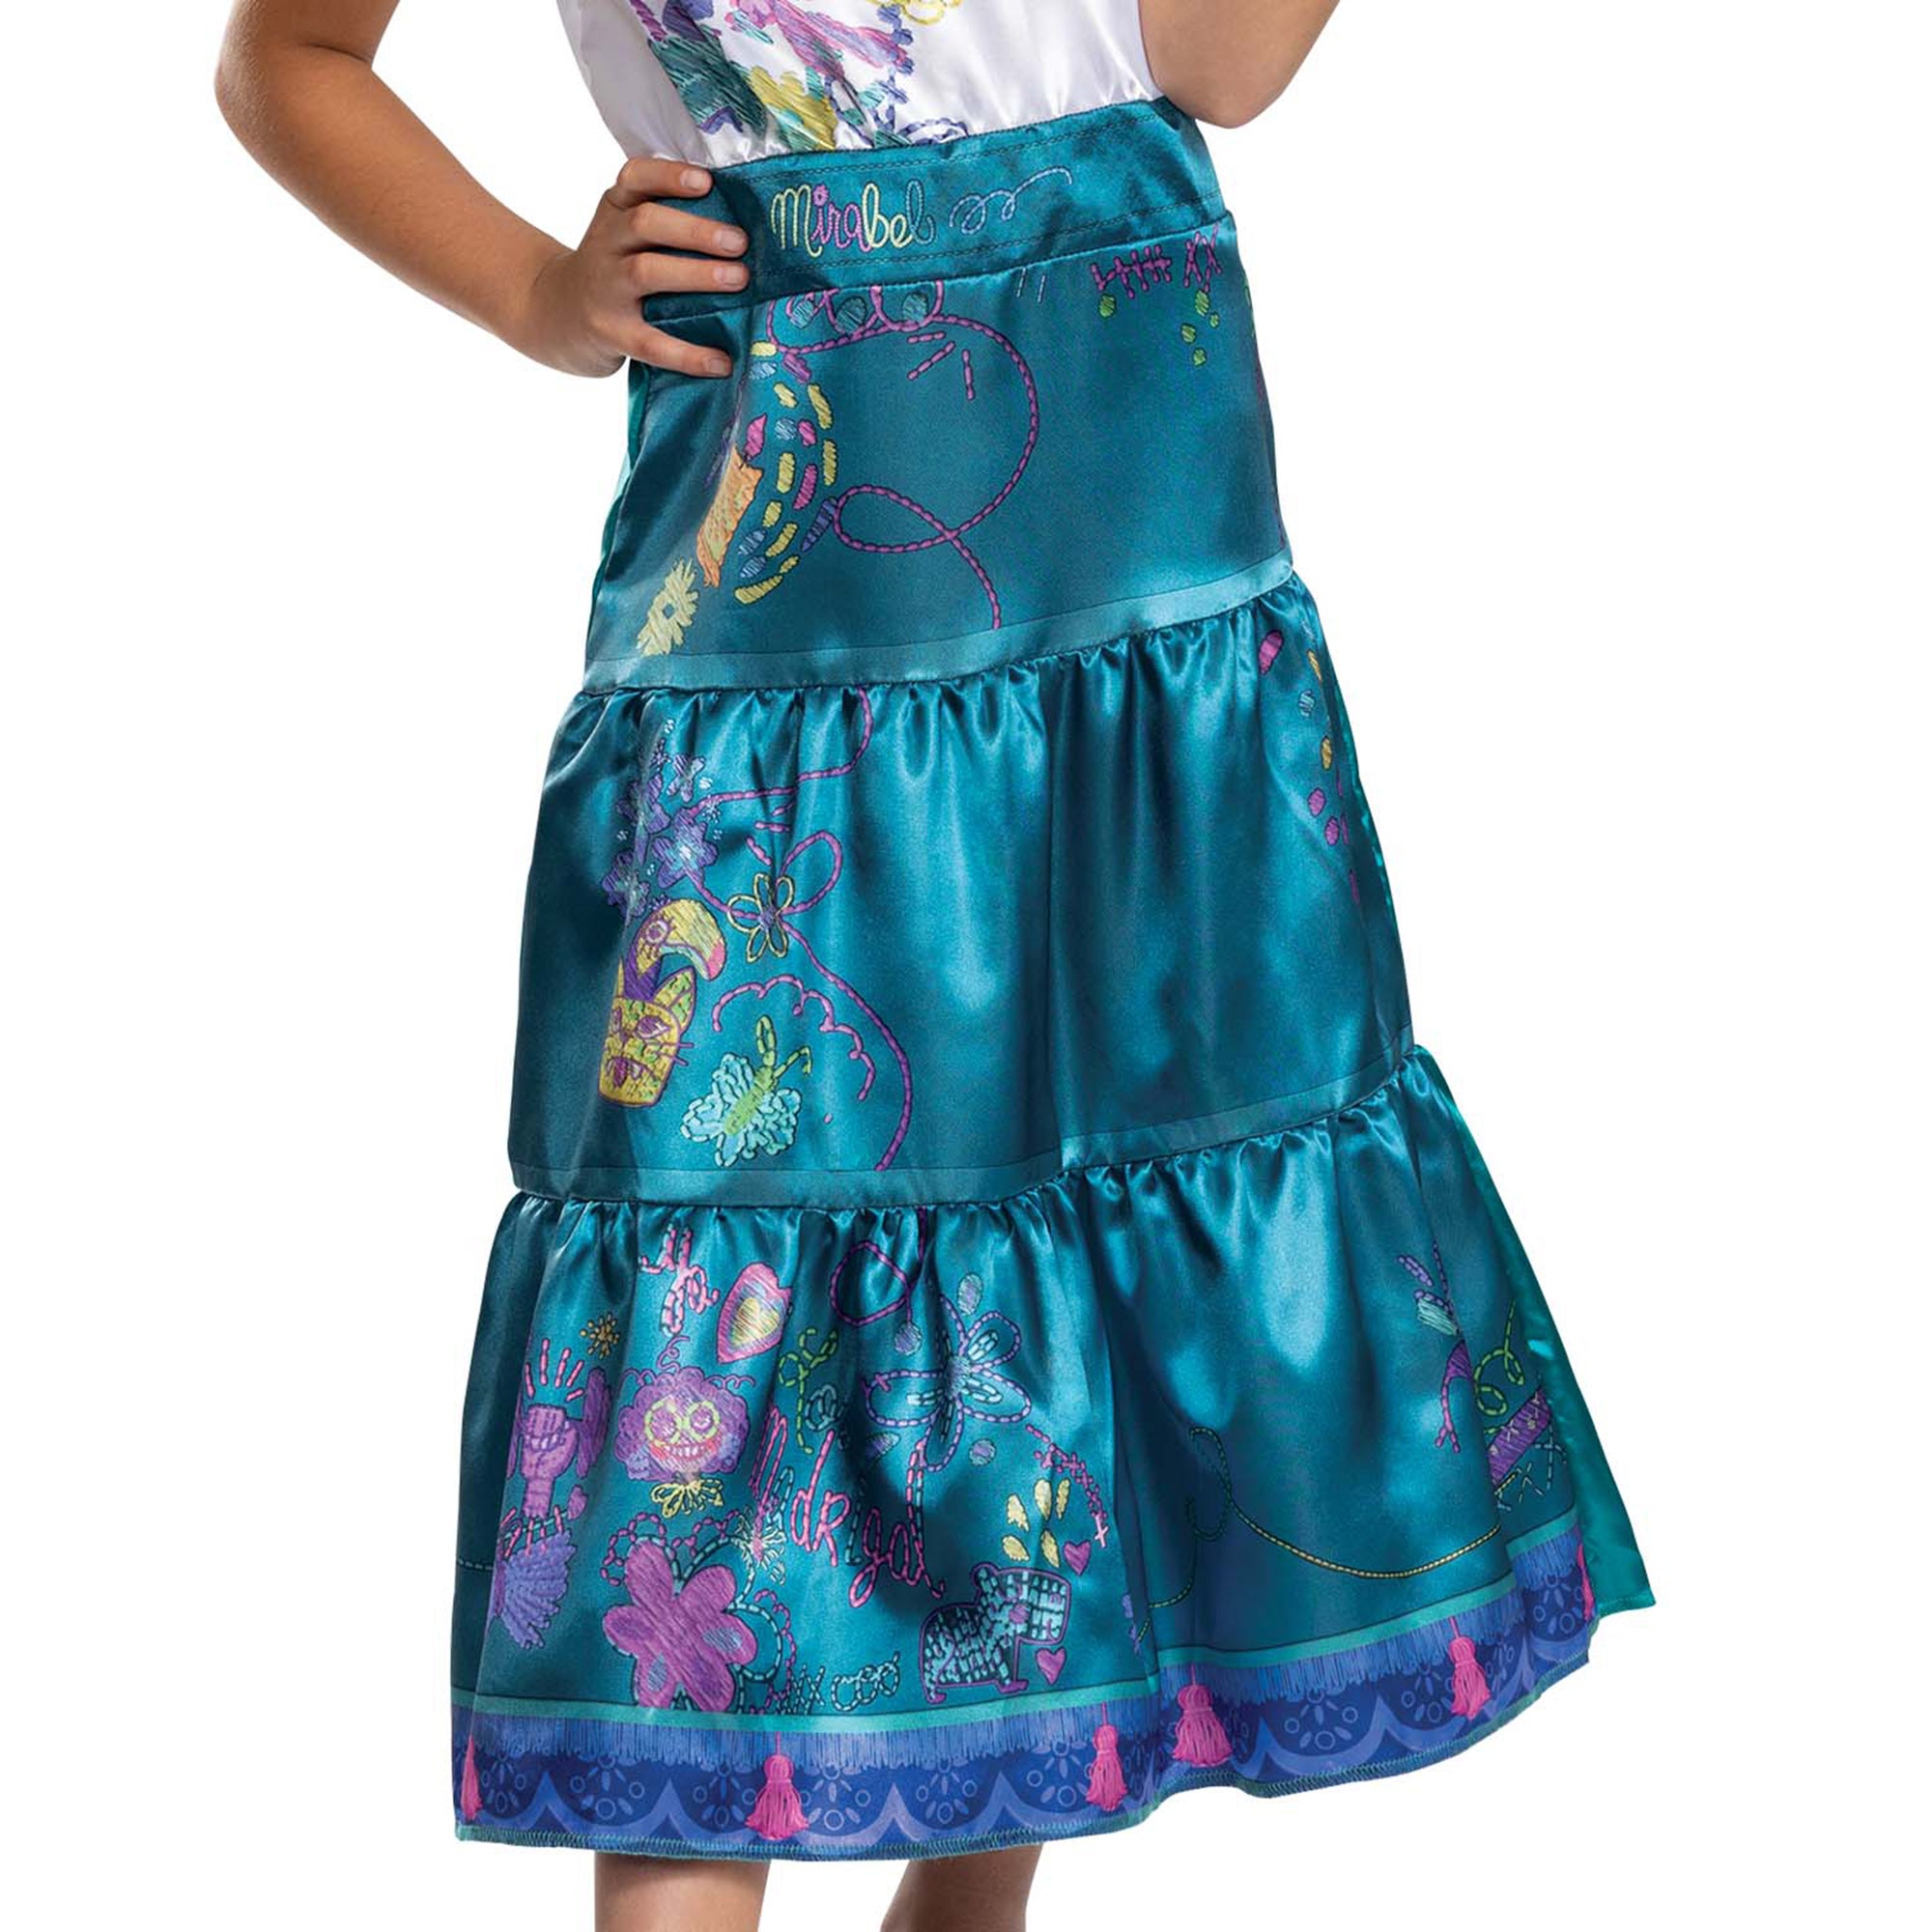 Disney Mirabel Classic Costume for Kids, Encanto, Dress